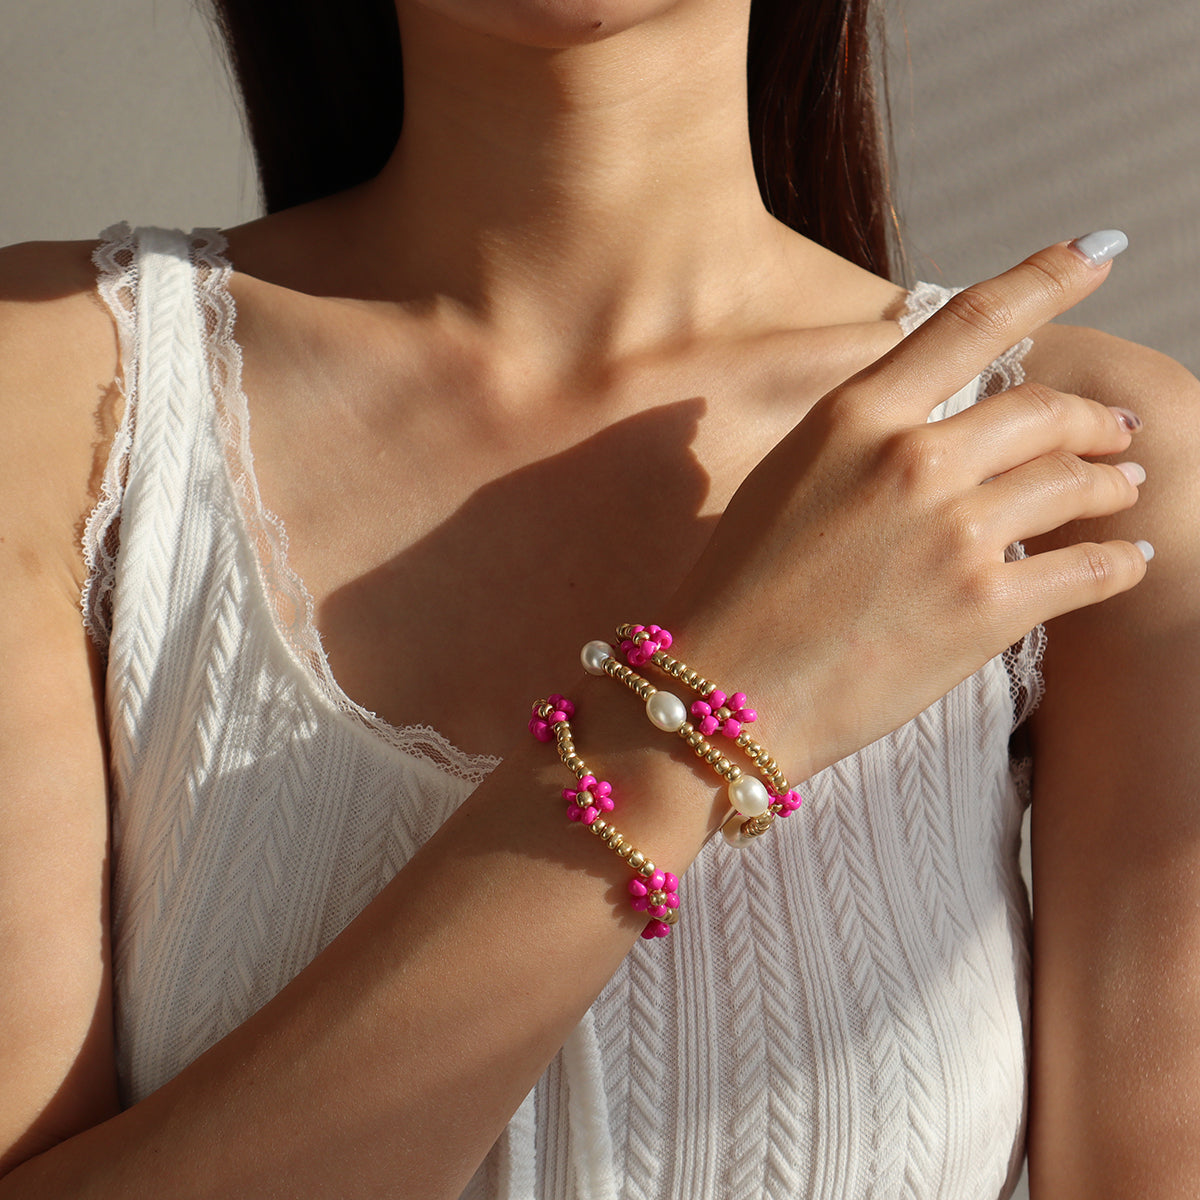 Rose Howlite & Pearl 18K Gold-Plated Mum Stretch Bracelet Set